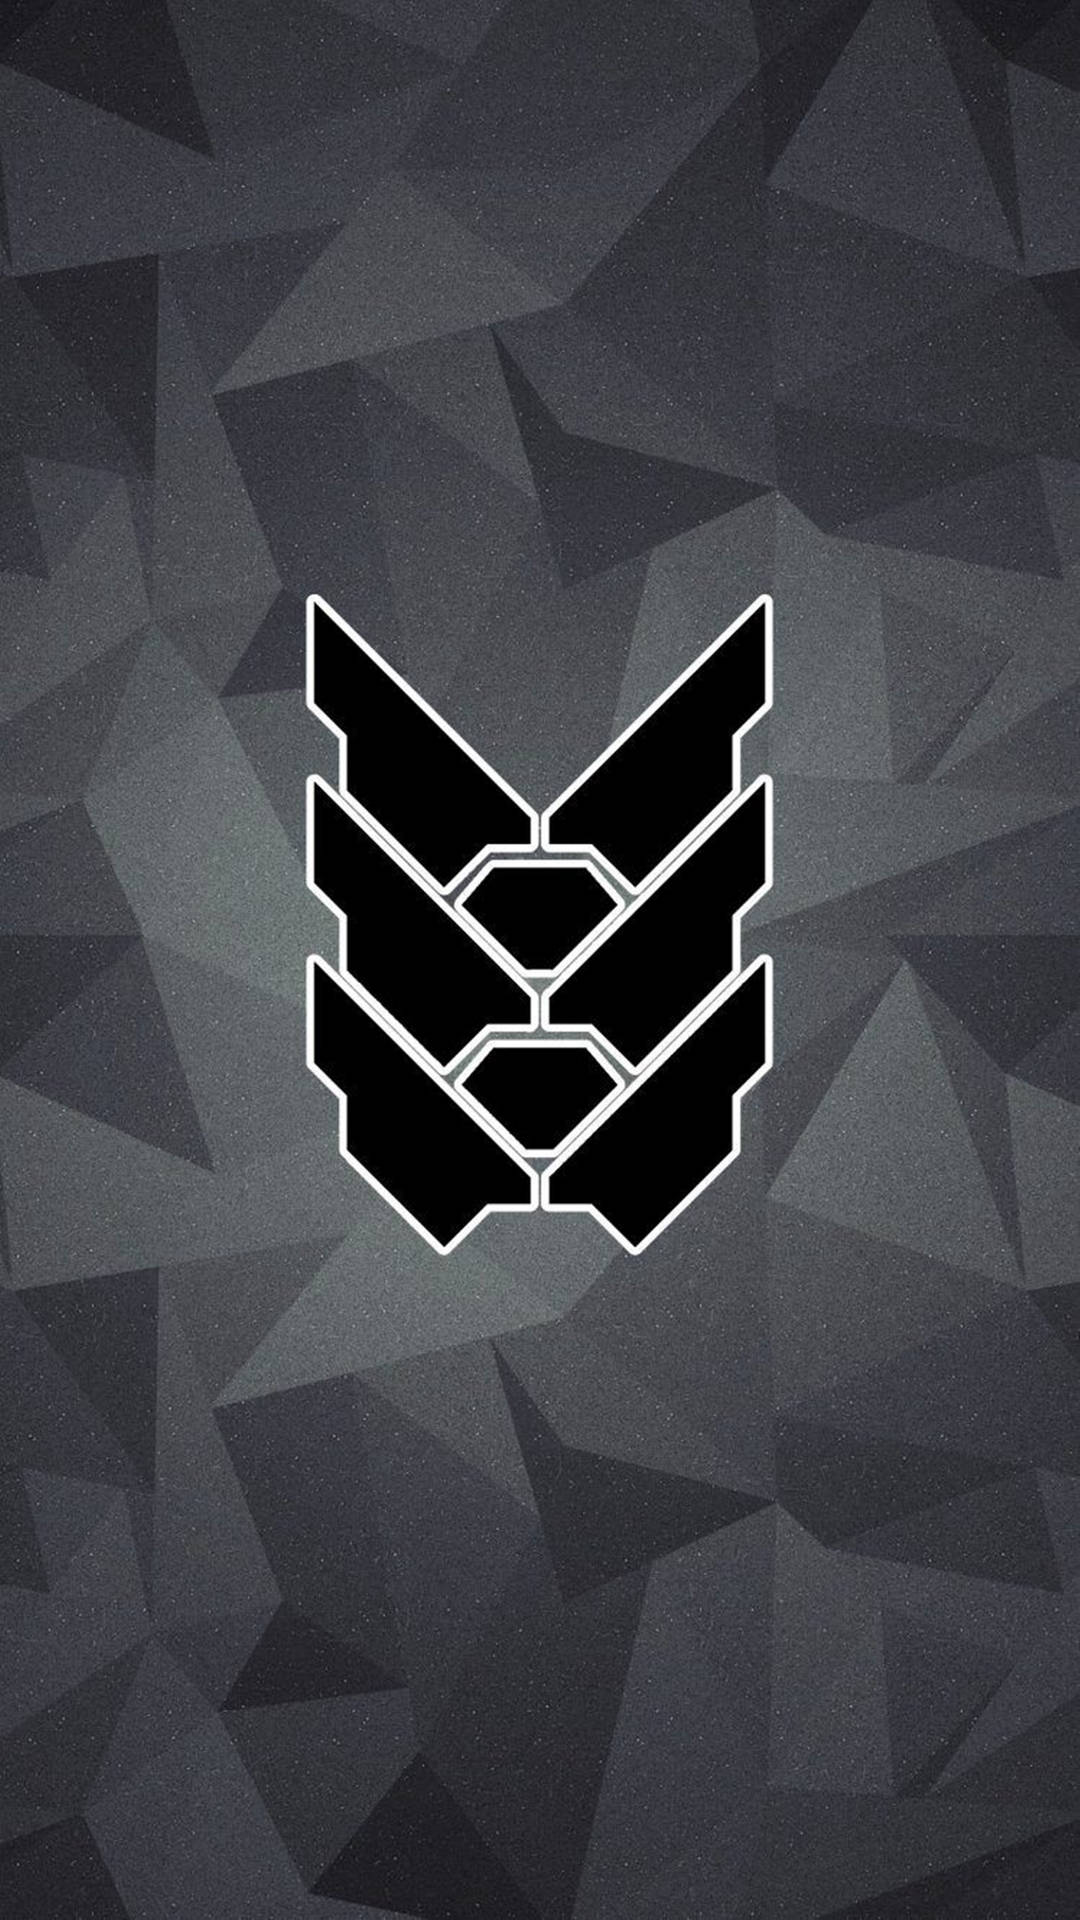 Halo 5 Guardians Logo Wallpaper